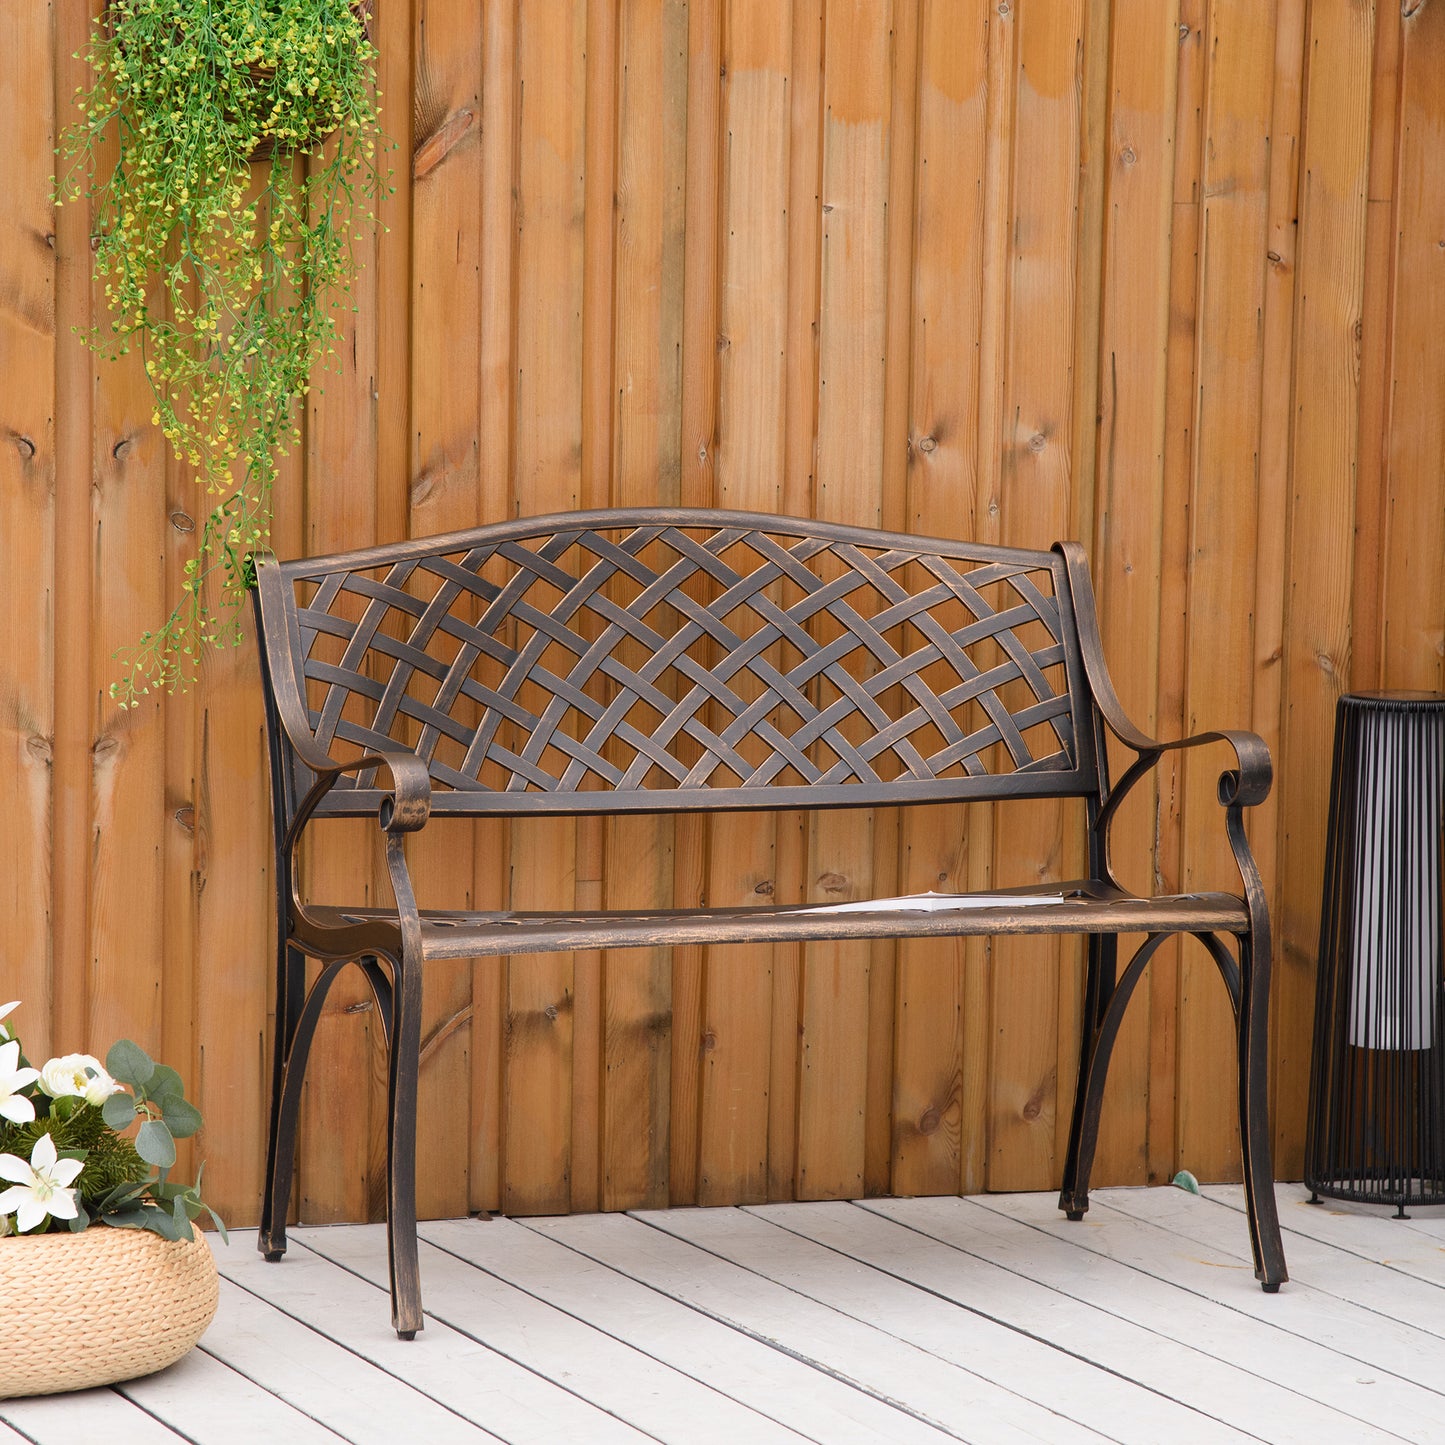 Outsunny Cast Aluminium Outdoor Garden Bench 2 Seater Antique Patio Porch Park Loveseat Chair, Bronze